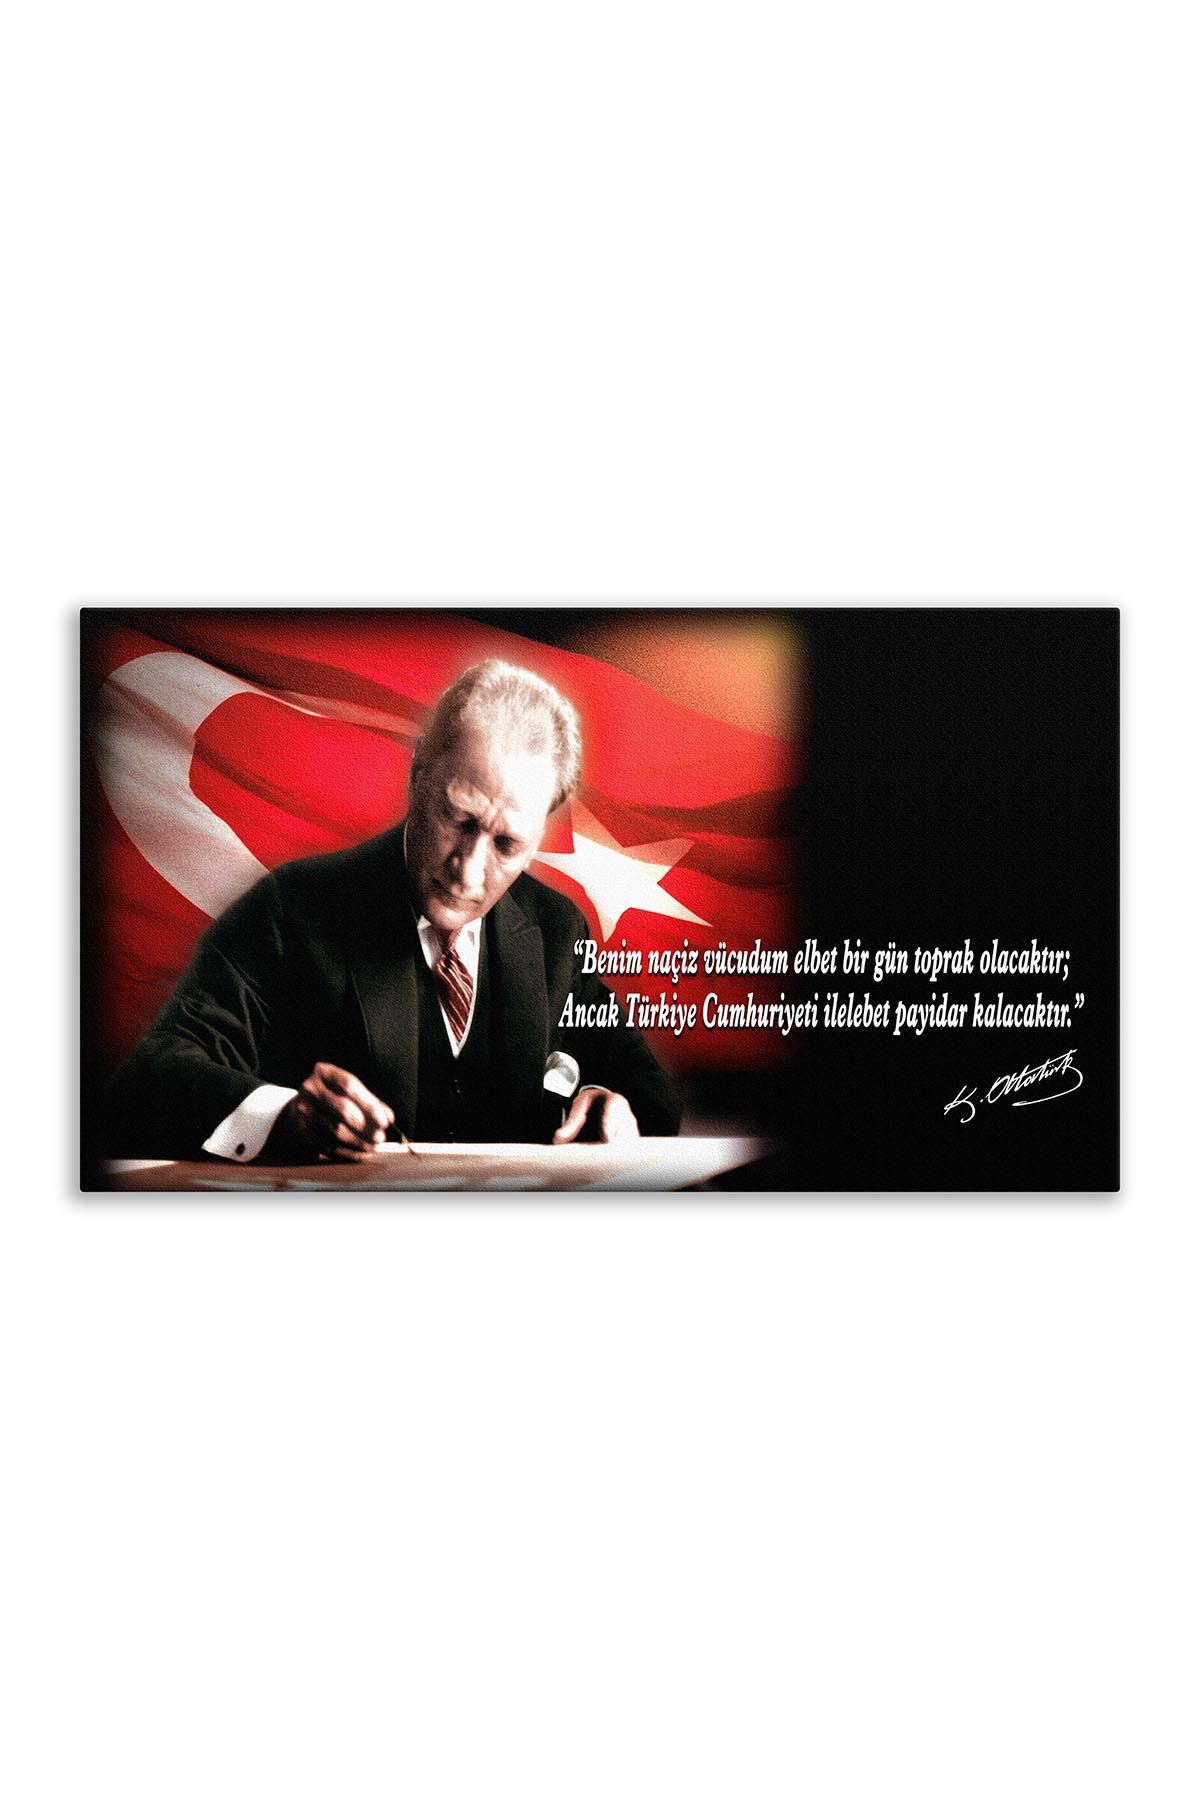 Atatürk Canvas Board With Turkish Flag | Printed Canvas Board | Customized Canvas Board 